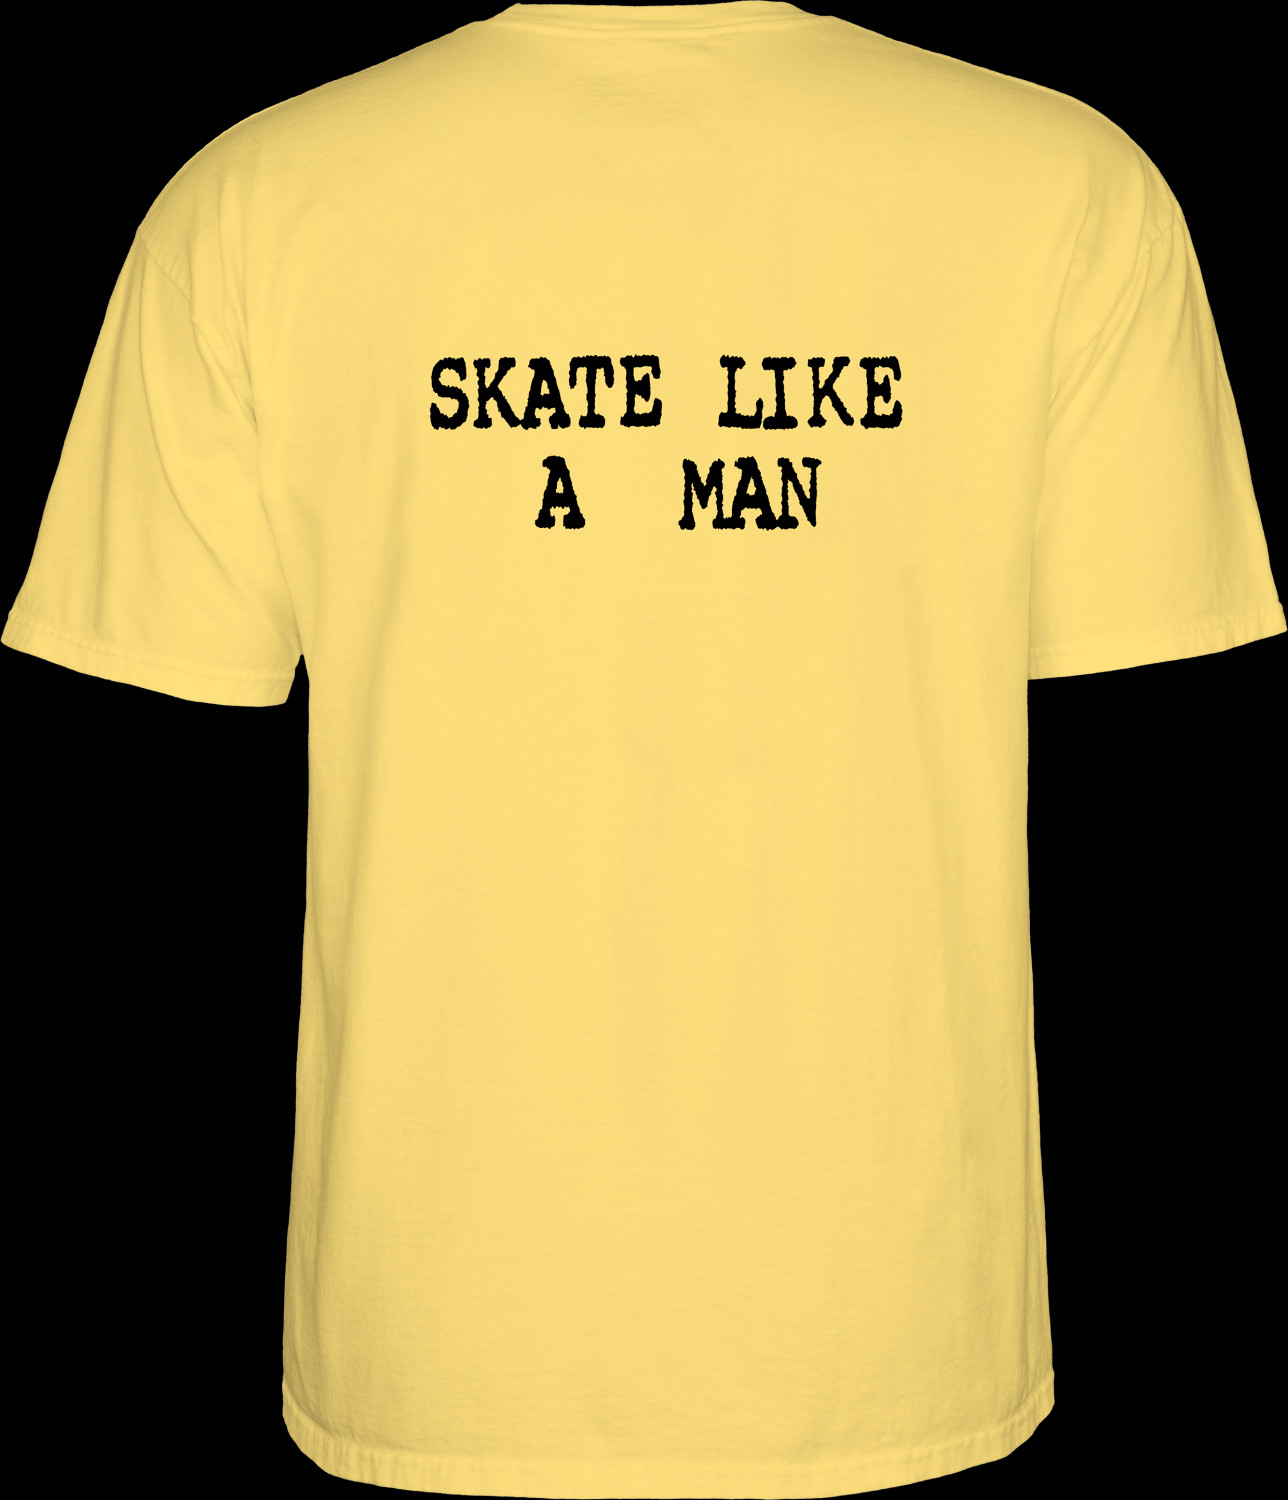 Powell Peralta Skate Chimp T-Shirt Banana Photo #1 - Photo Gallery ...